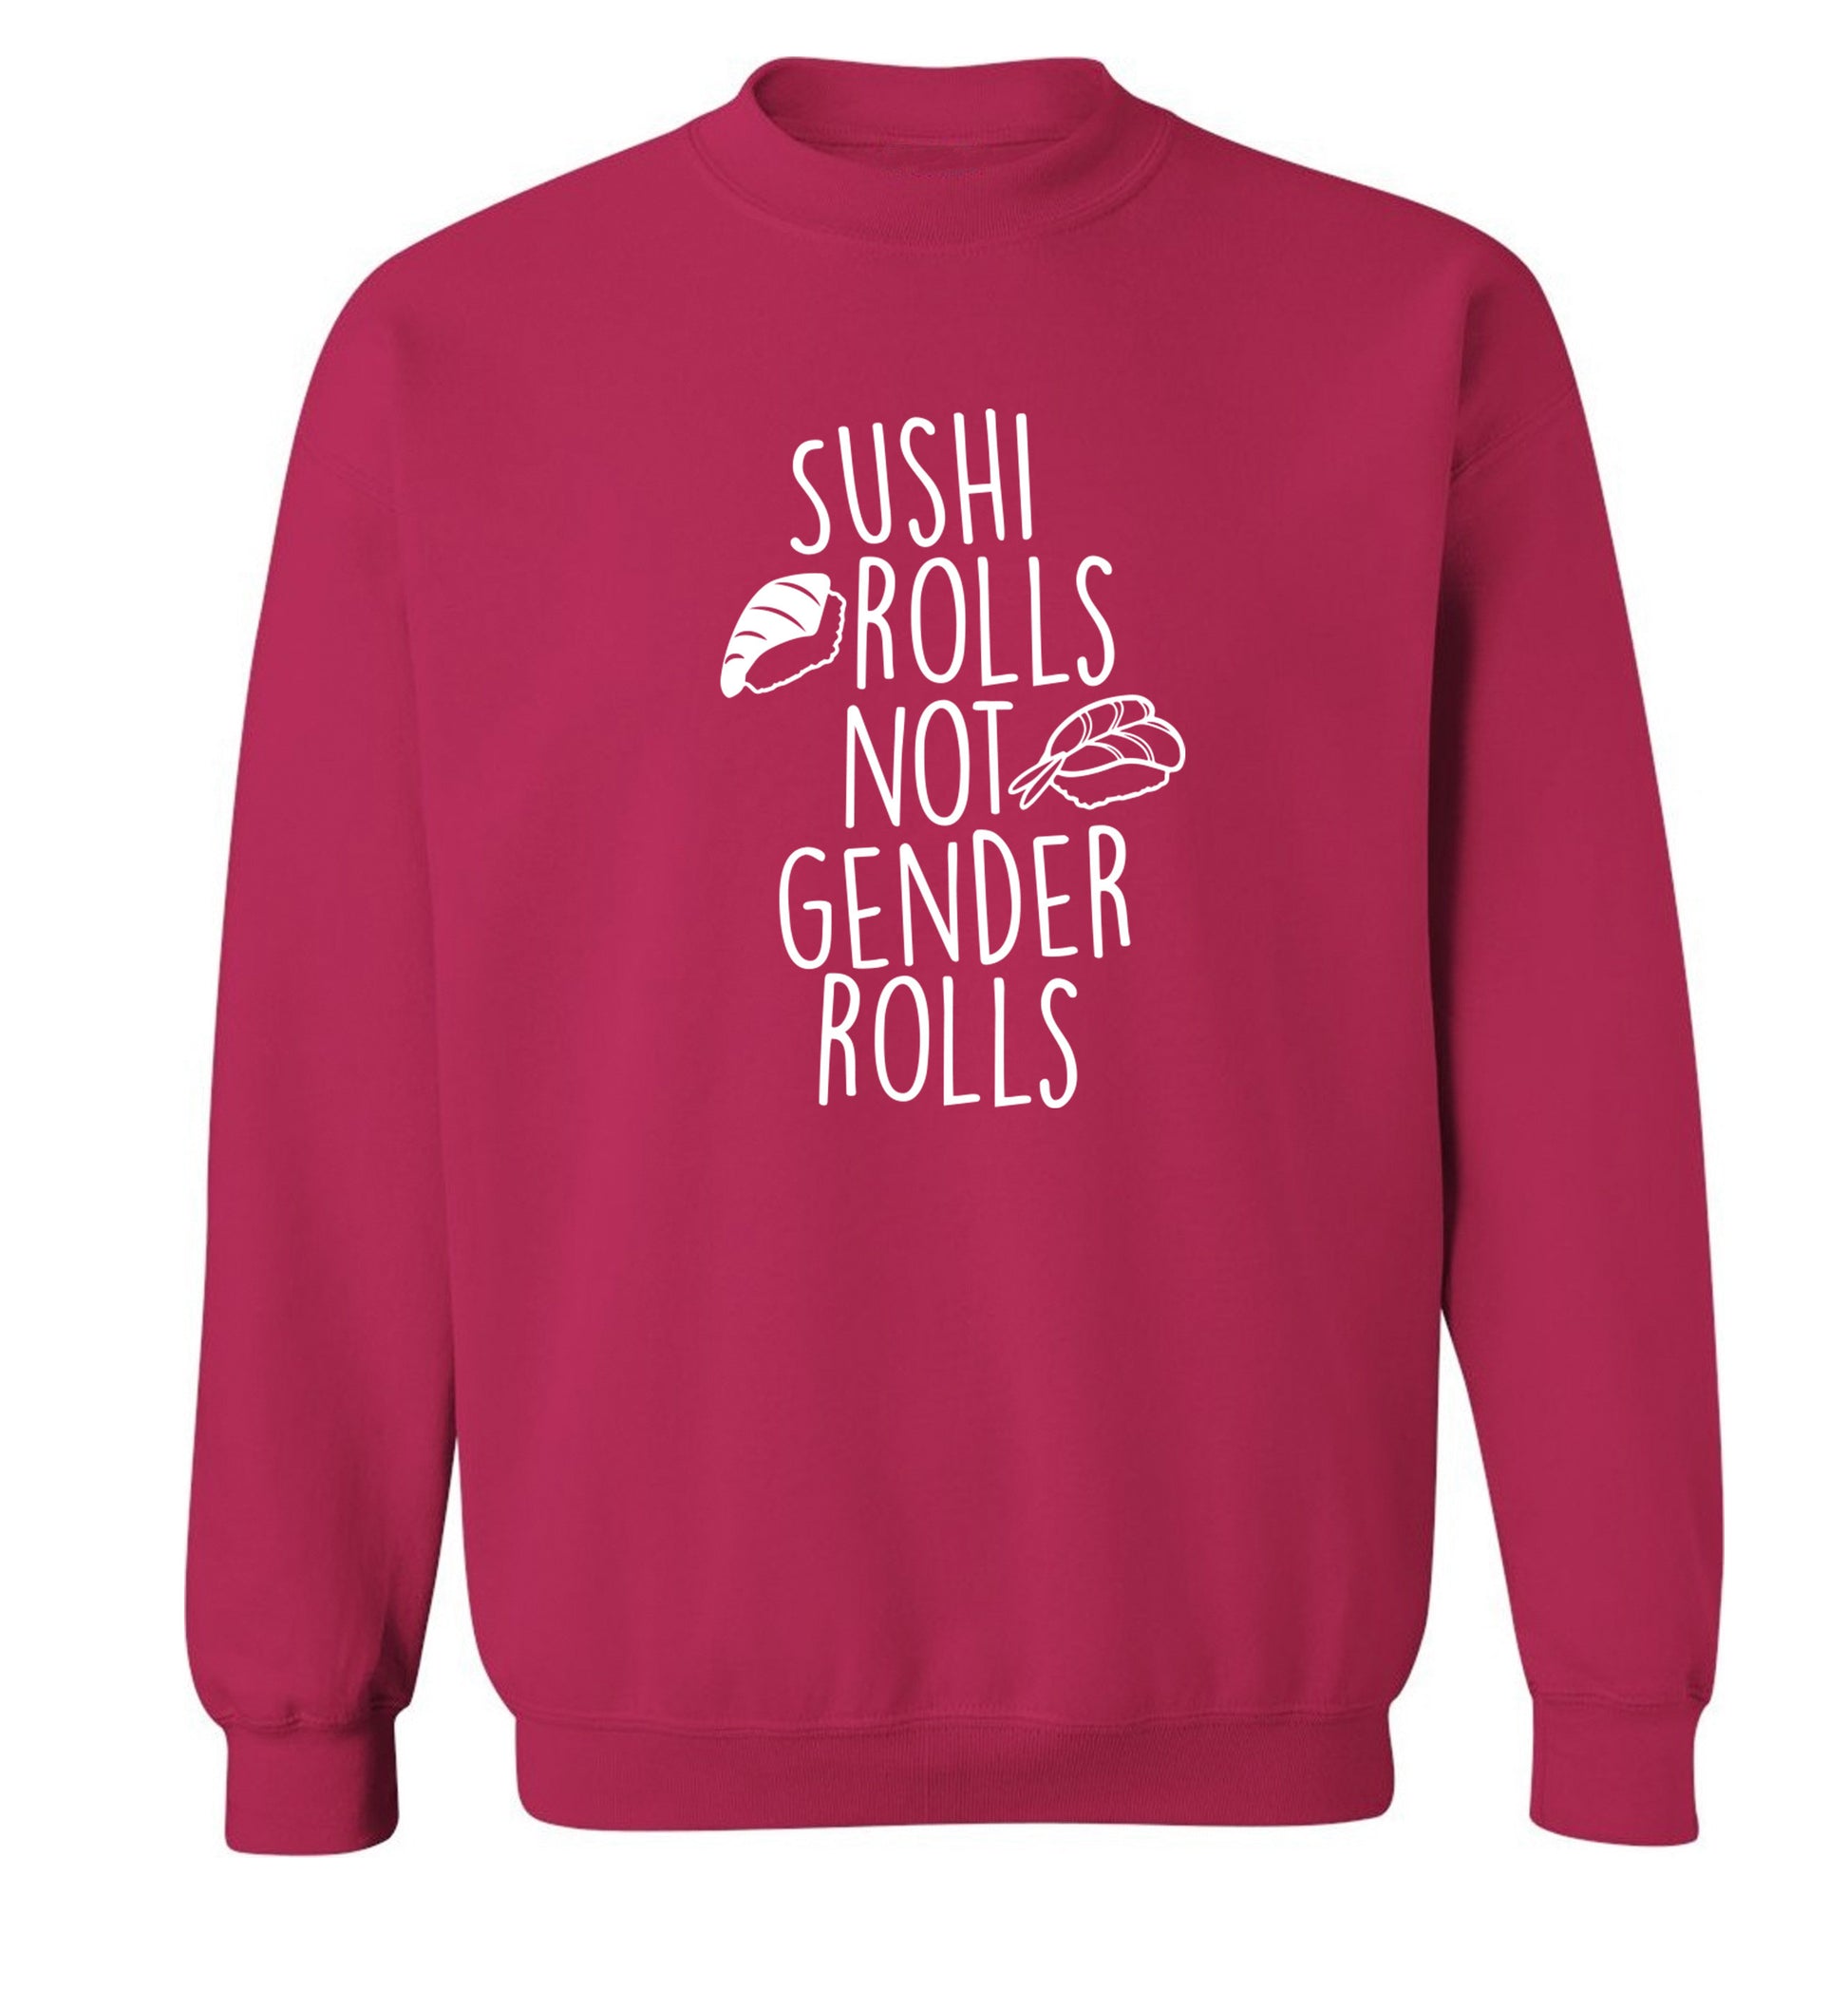 Sushi rolls not gender rolls Adult's unisex pink Sweater 2XL